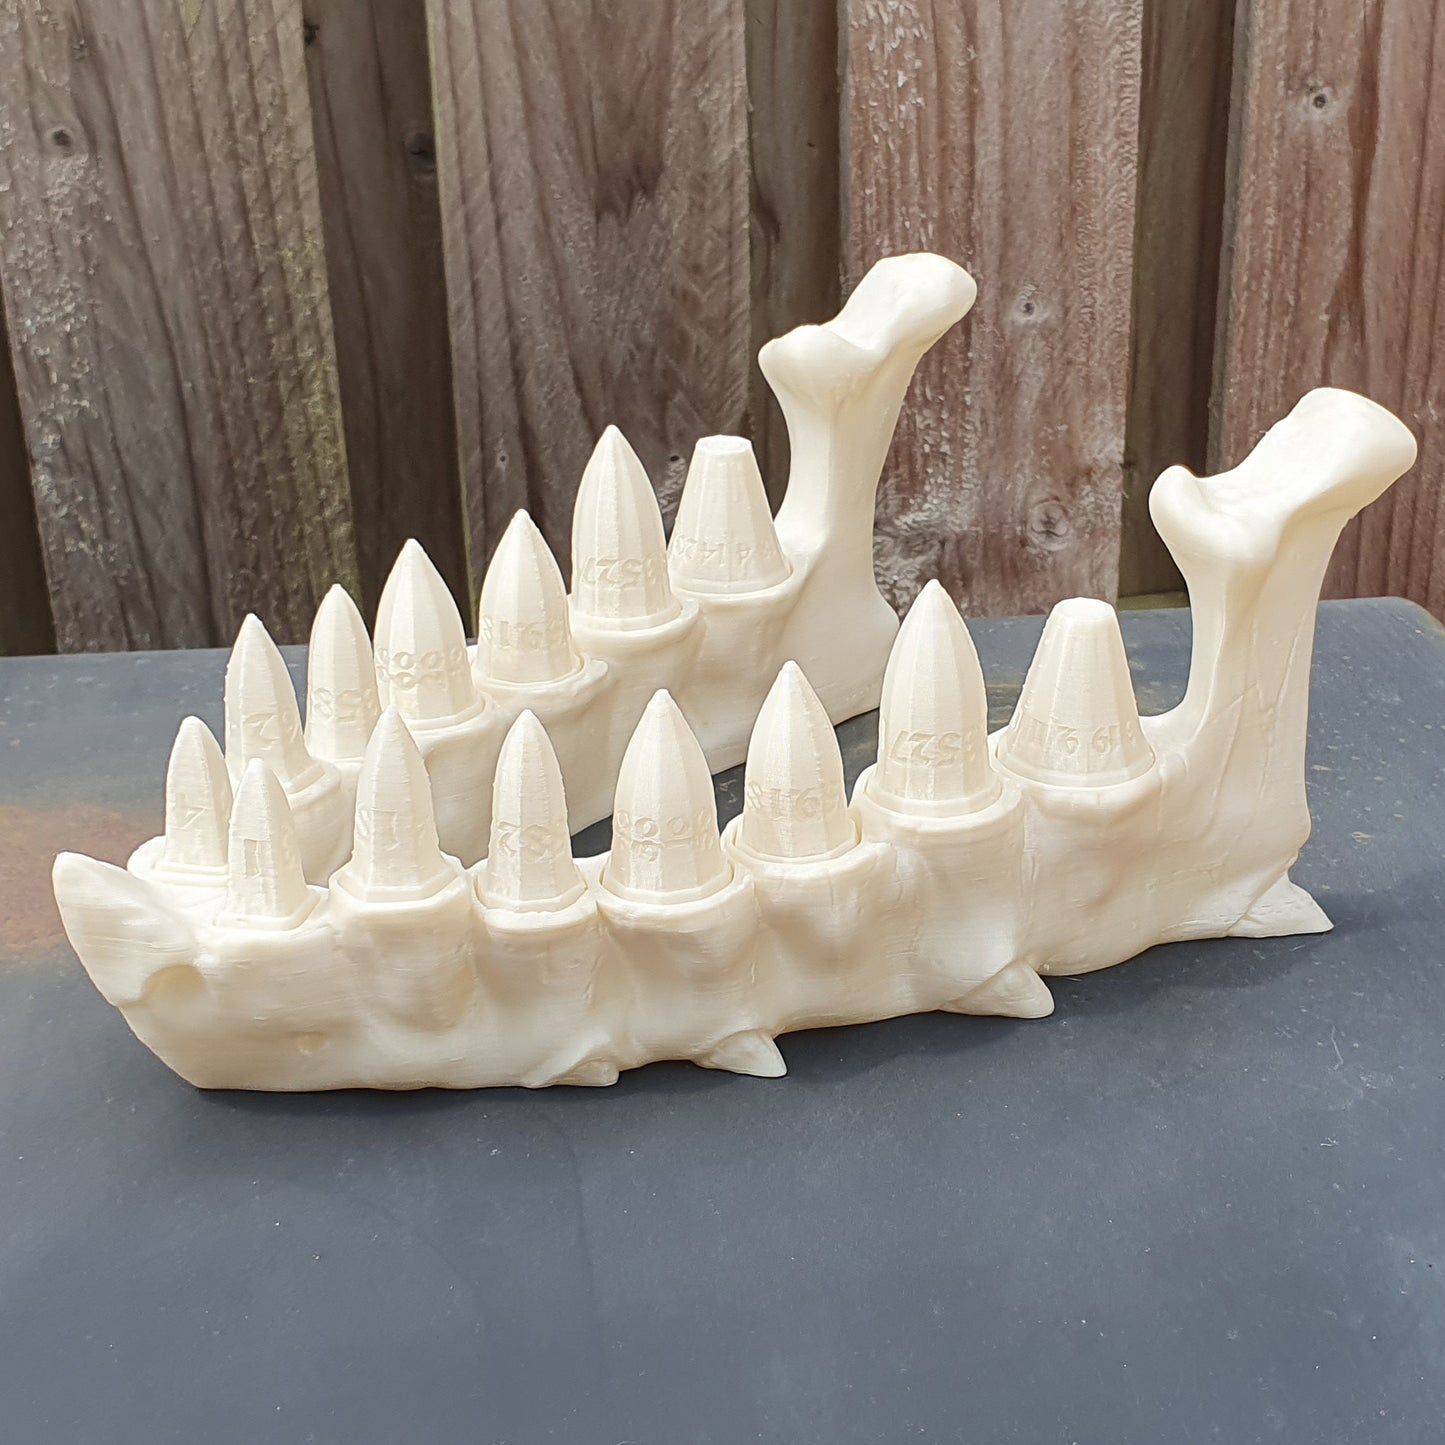 Dragon's Teeth Dice Sets & Jaw Holder